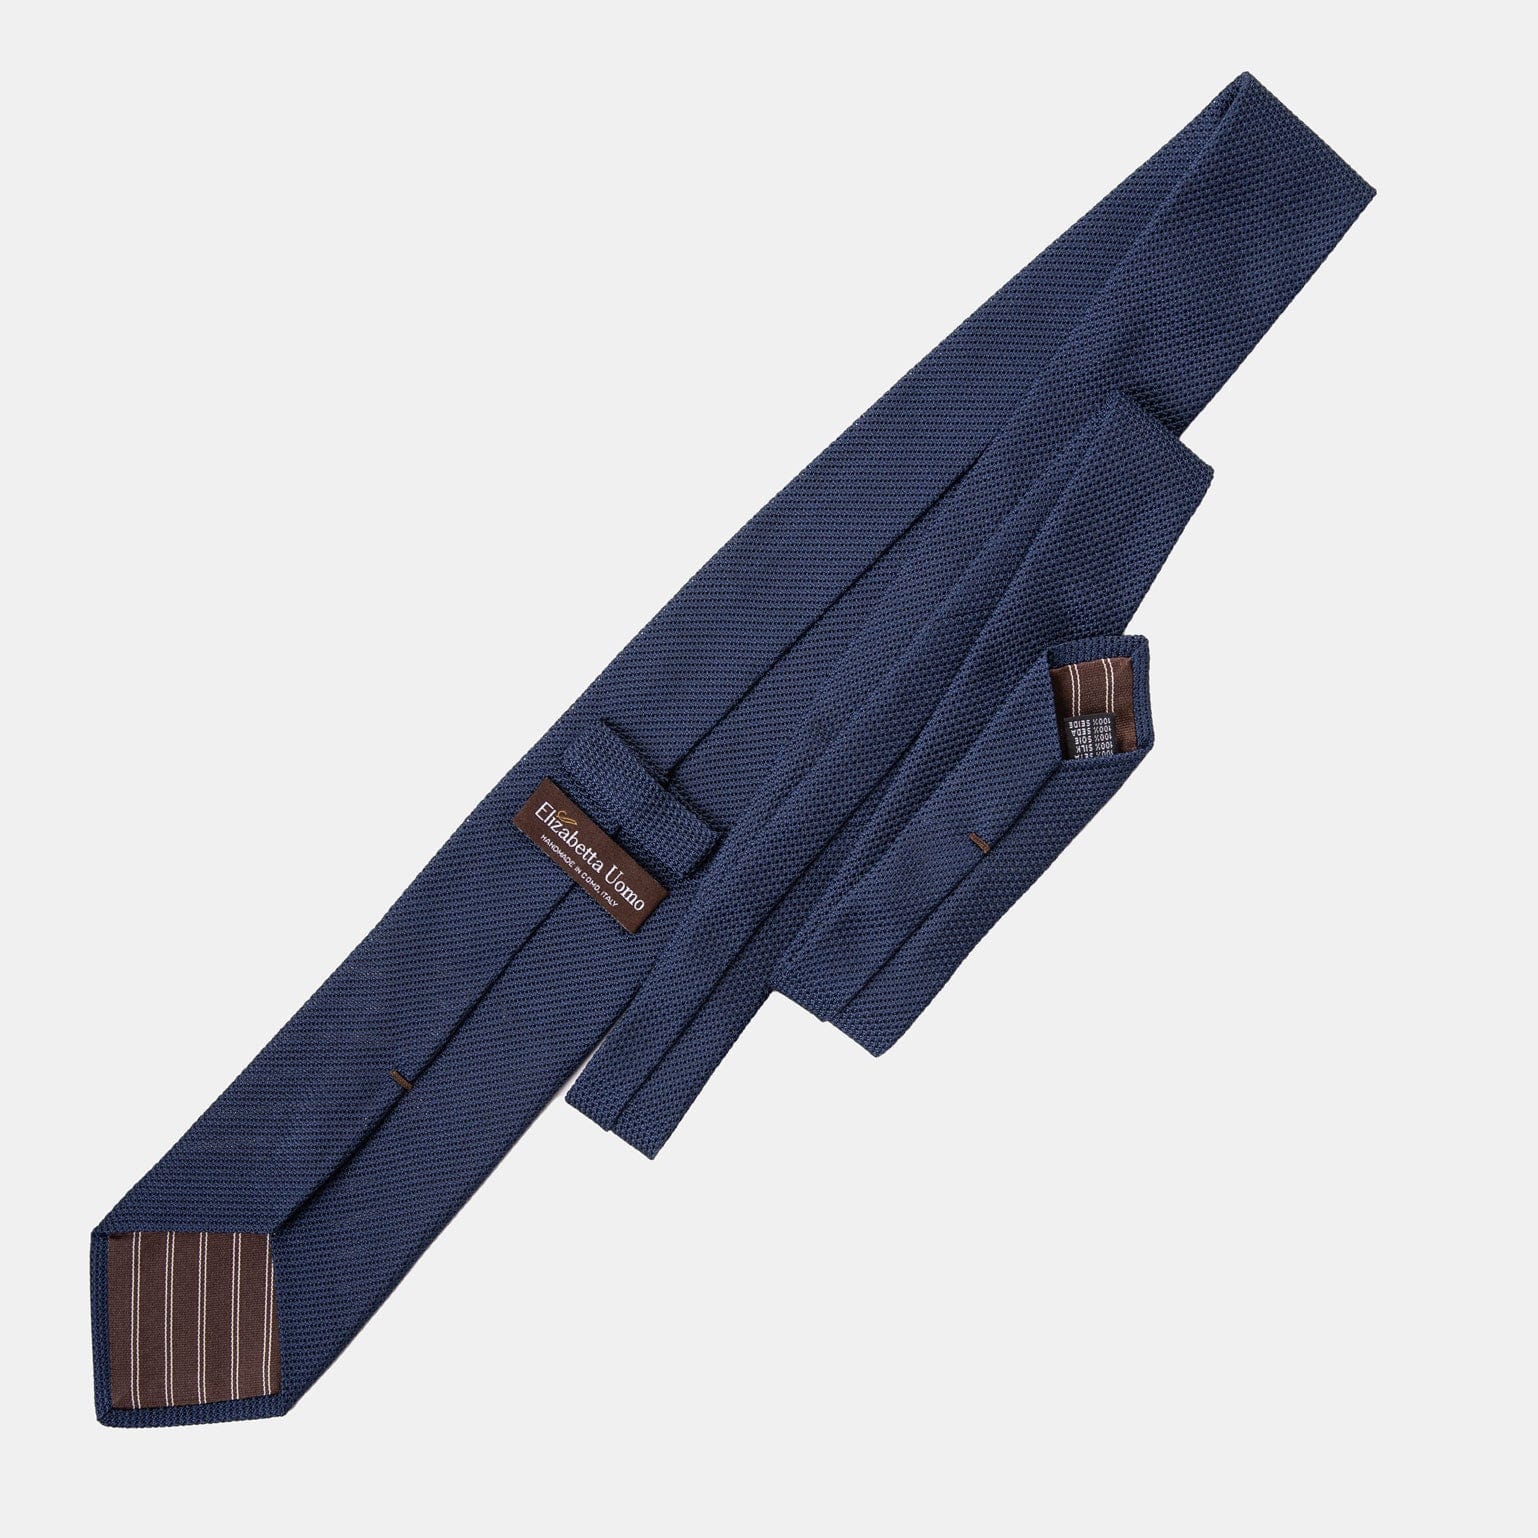 Grenadine Tie in Navy Blue Silk Handmade by Fort Belvedere